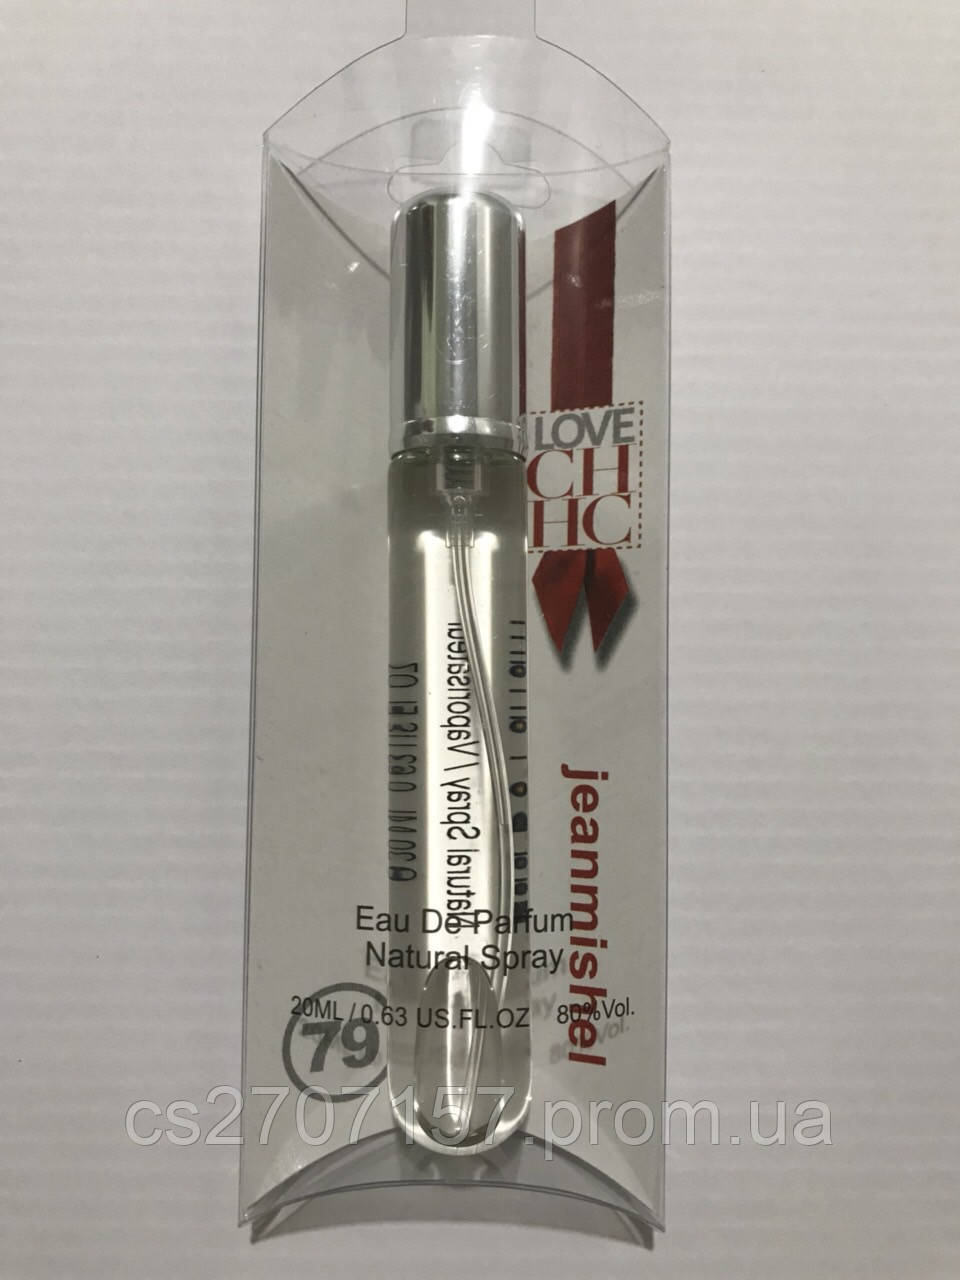 Жіночі парфуми ручка Love CH HC Jeanmishel 20 мл